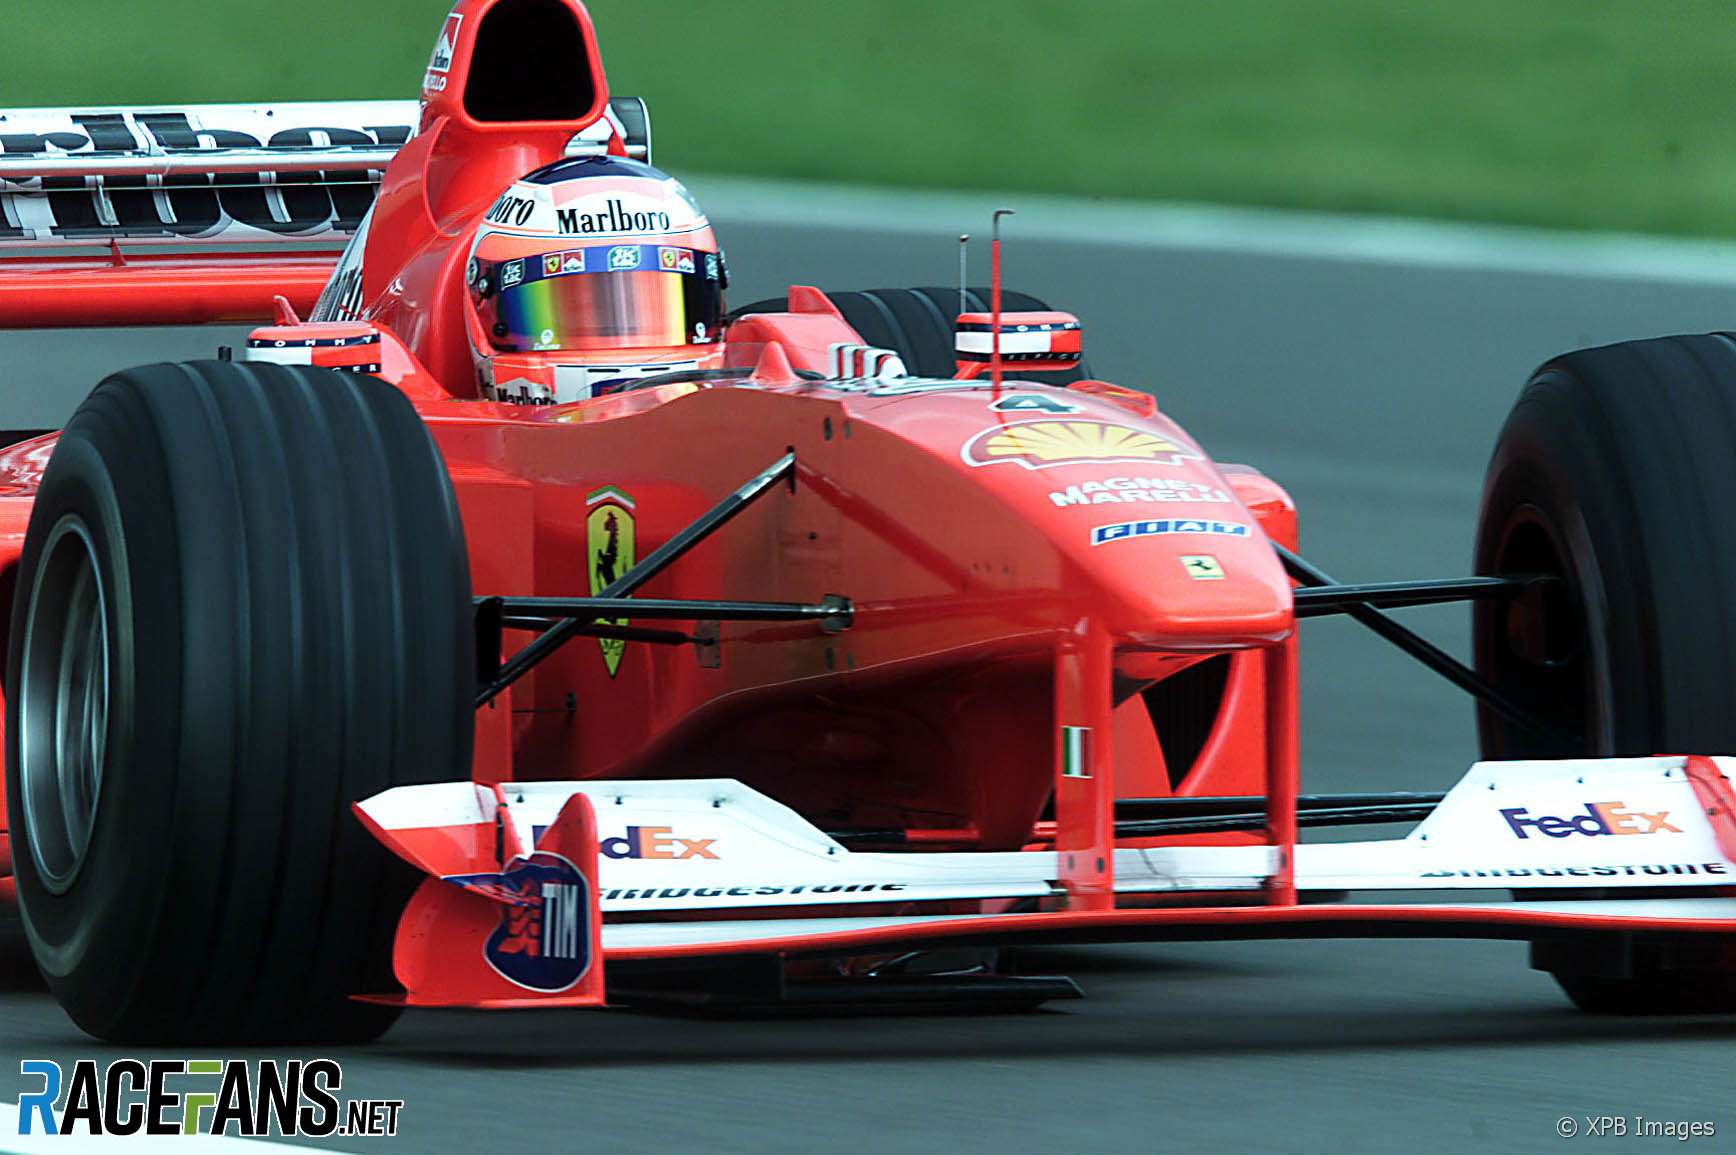 Rubens Barrichello, Ferrari, Nurburgring, 2000